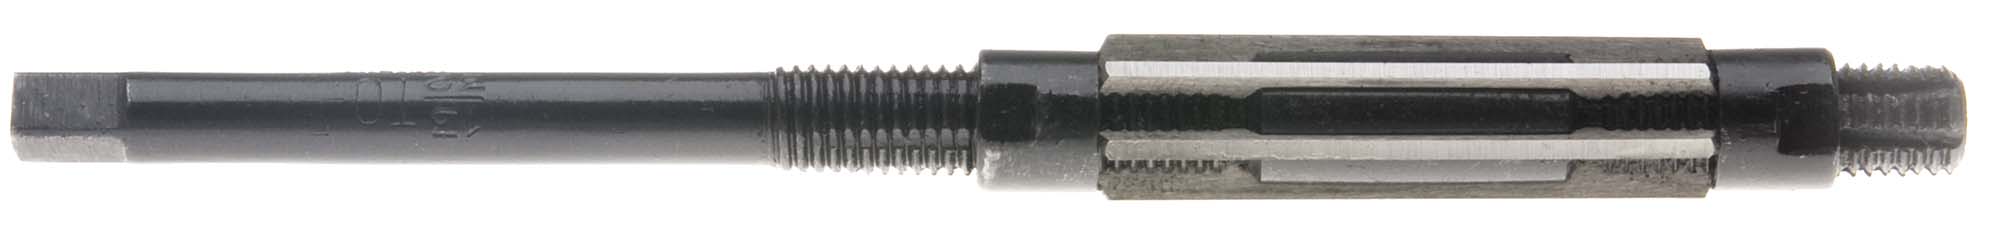 RMBL-6A High Speed Steel Adjustable Blade Reamer, 5/16"-11/32"